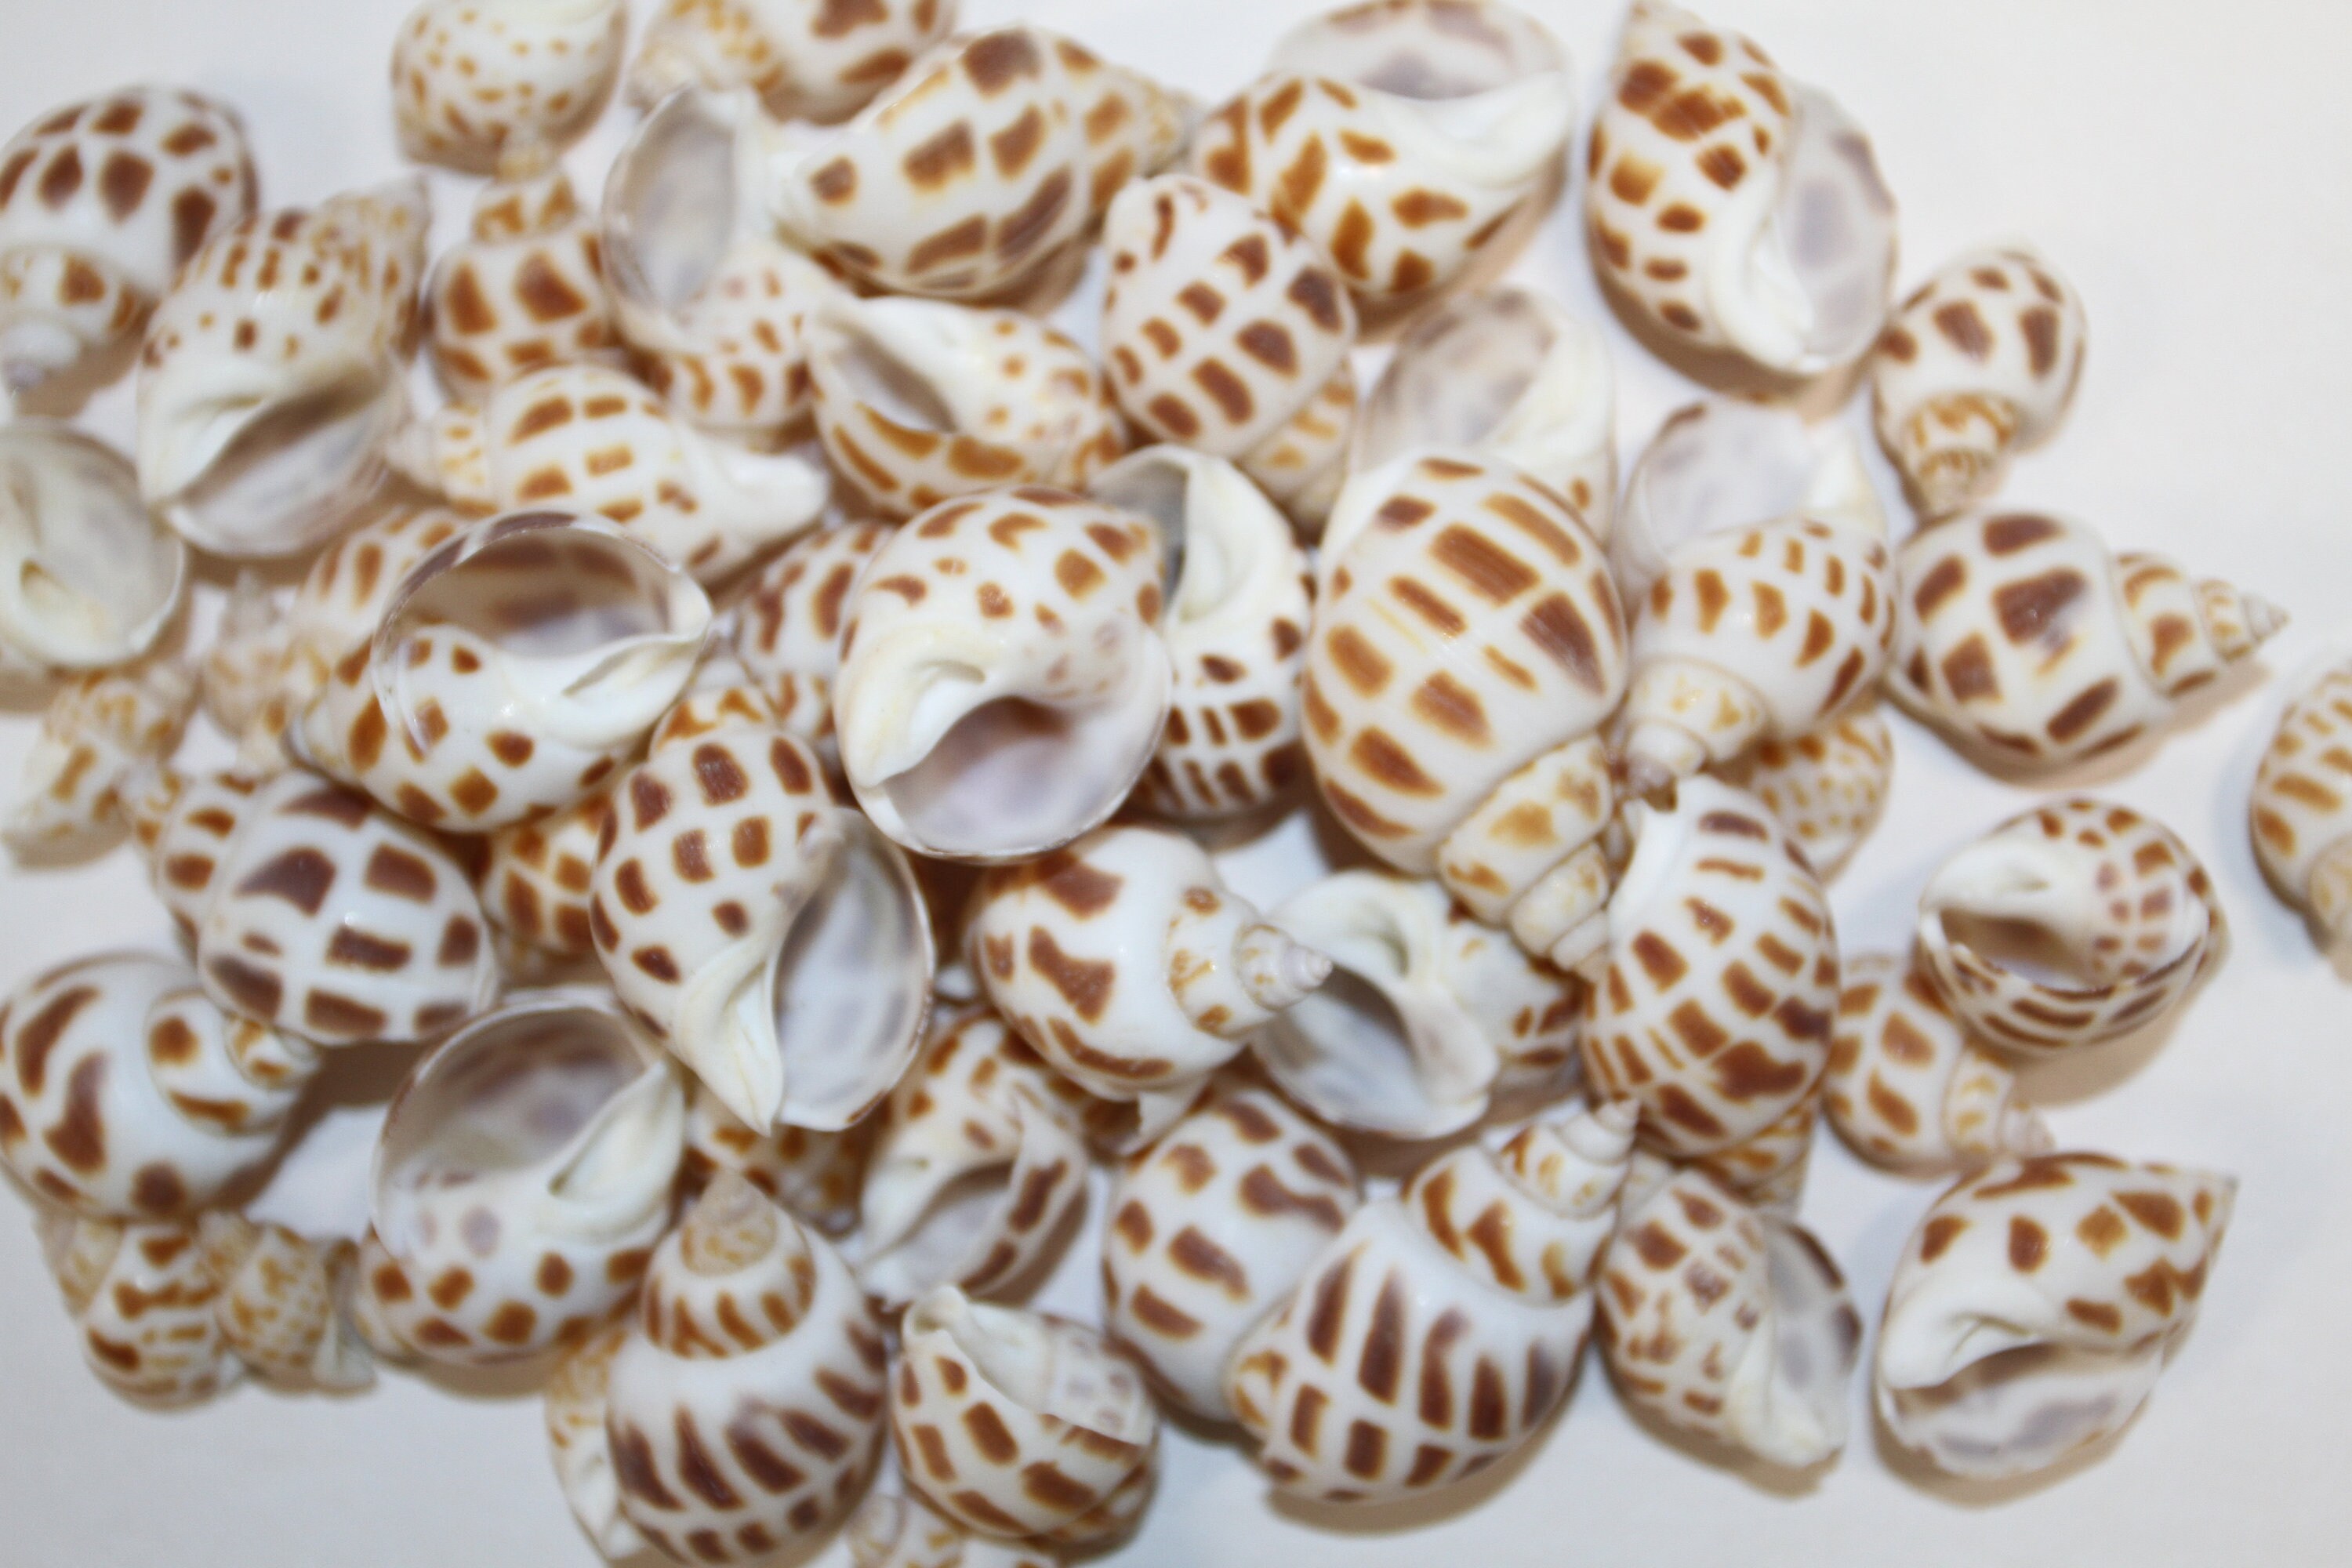 36 Small Seashells Spiral Seashells Small Natural Shells Beach Shells Mini  Shells for Beach Craft/ Resin/art Crafts/diy/jewellery/ Epoxy 